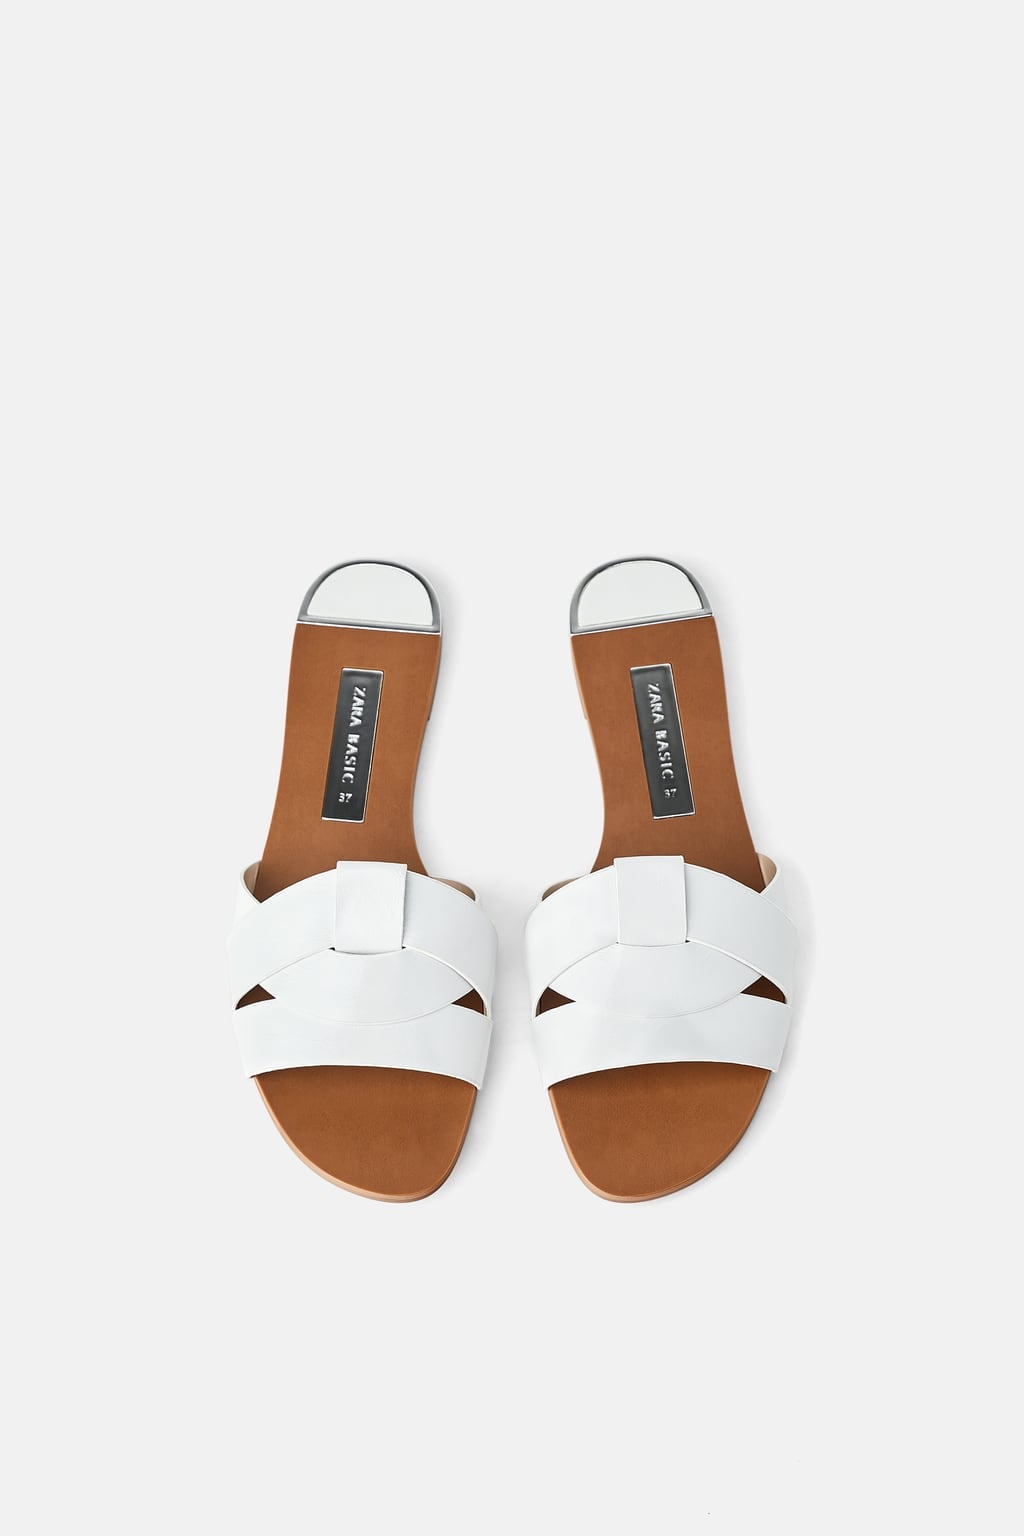 zara white slippers